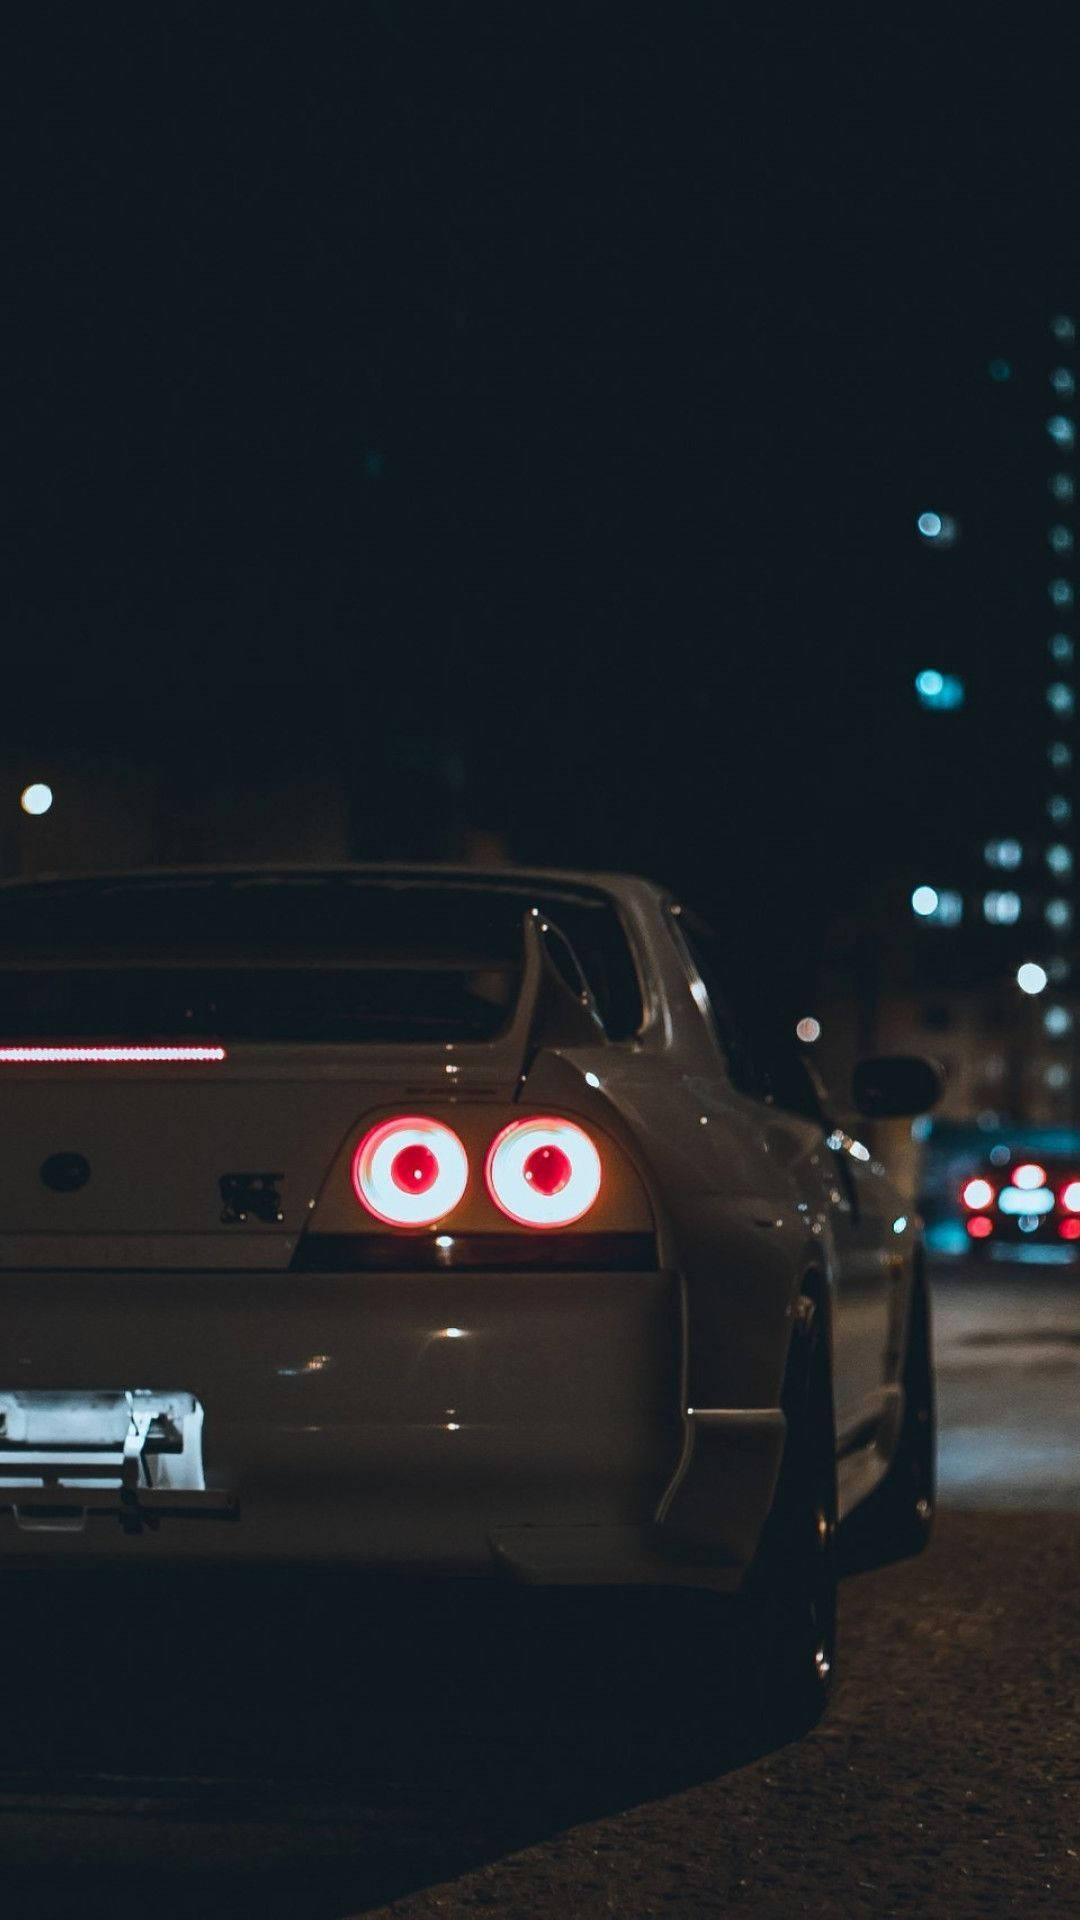 Dark Jdm Car At Night Background